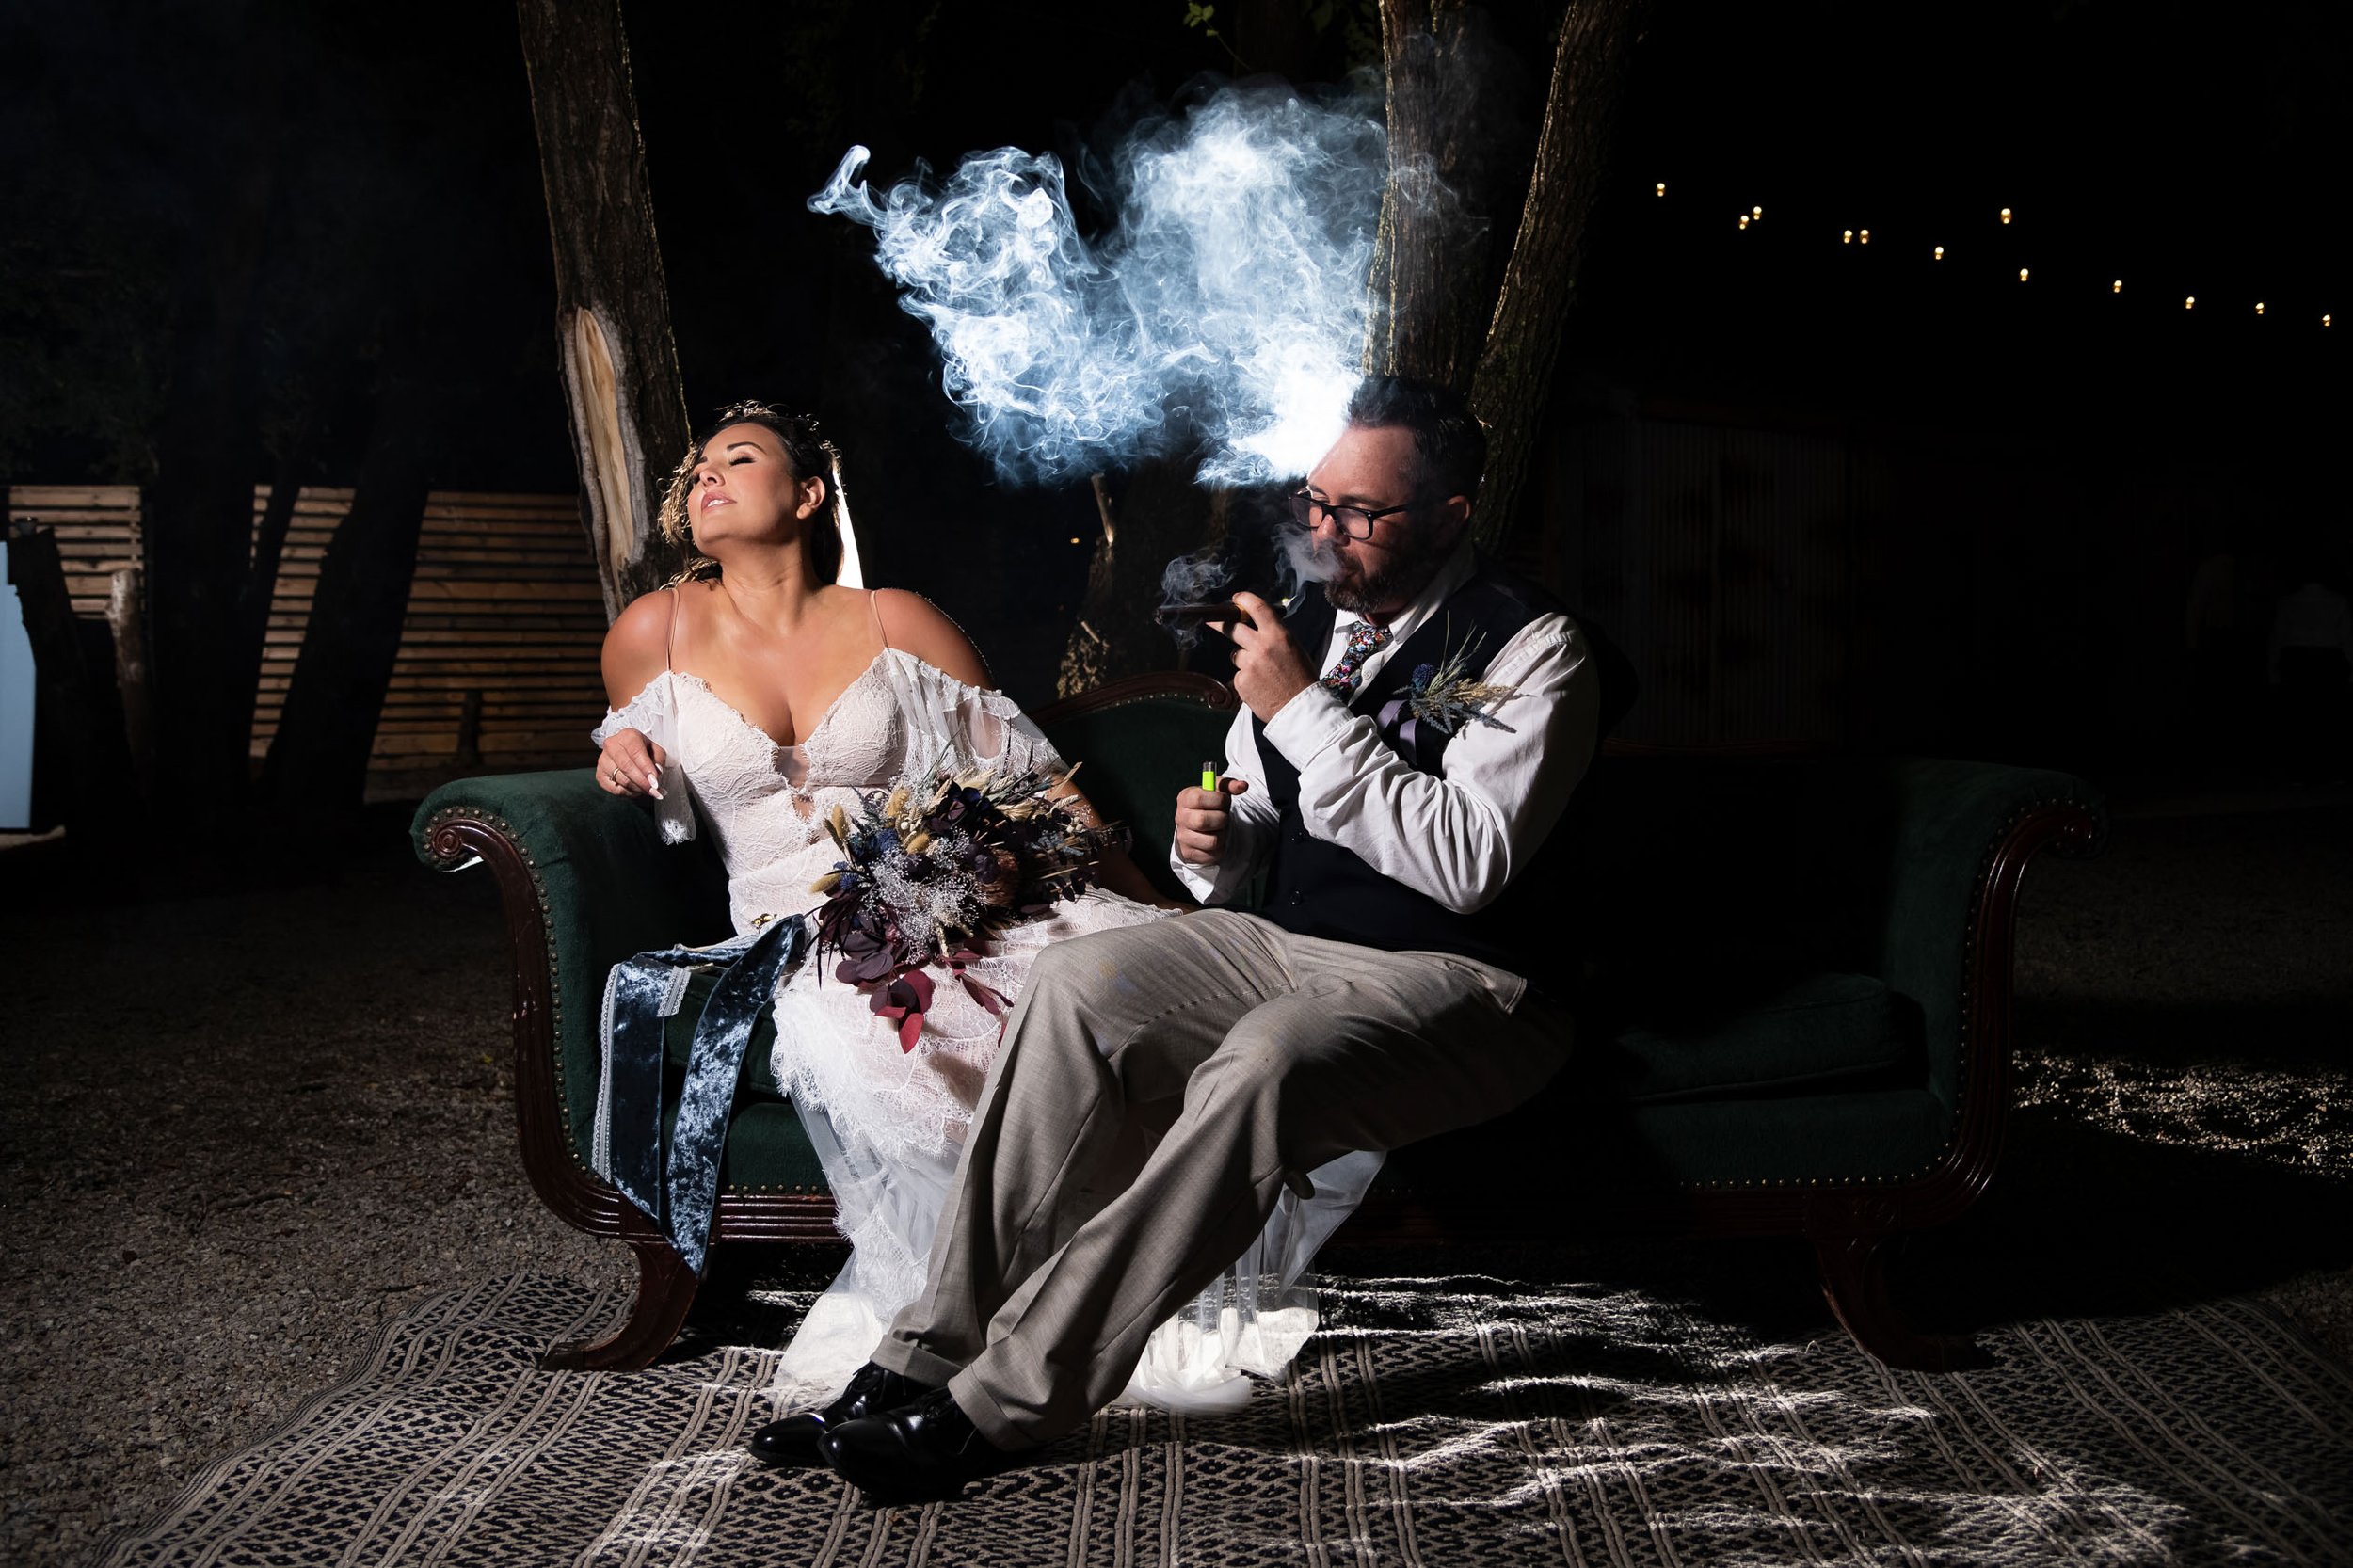 wedding-photographer-photography-okc-edmond-oklahoma-city-beautiful-bride-groom-gin-smoke-night-portrait-moody-chadandbriephotography.jpg